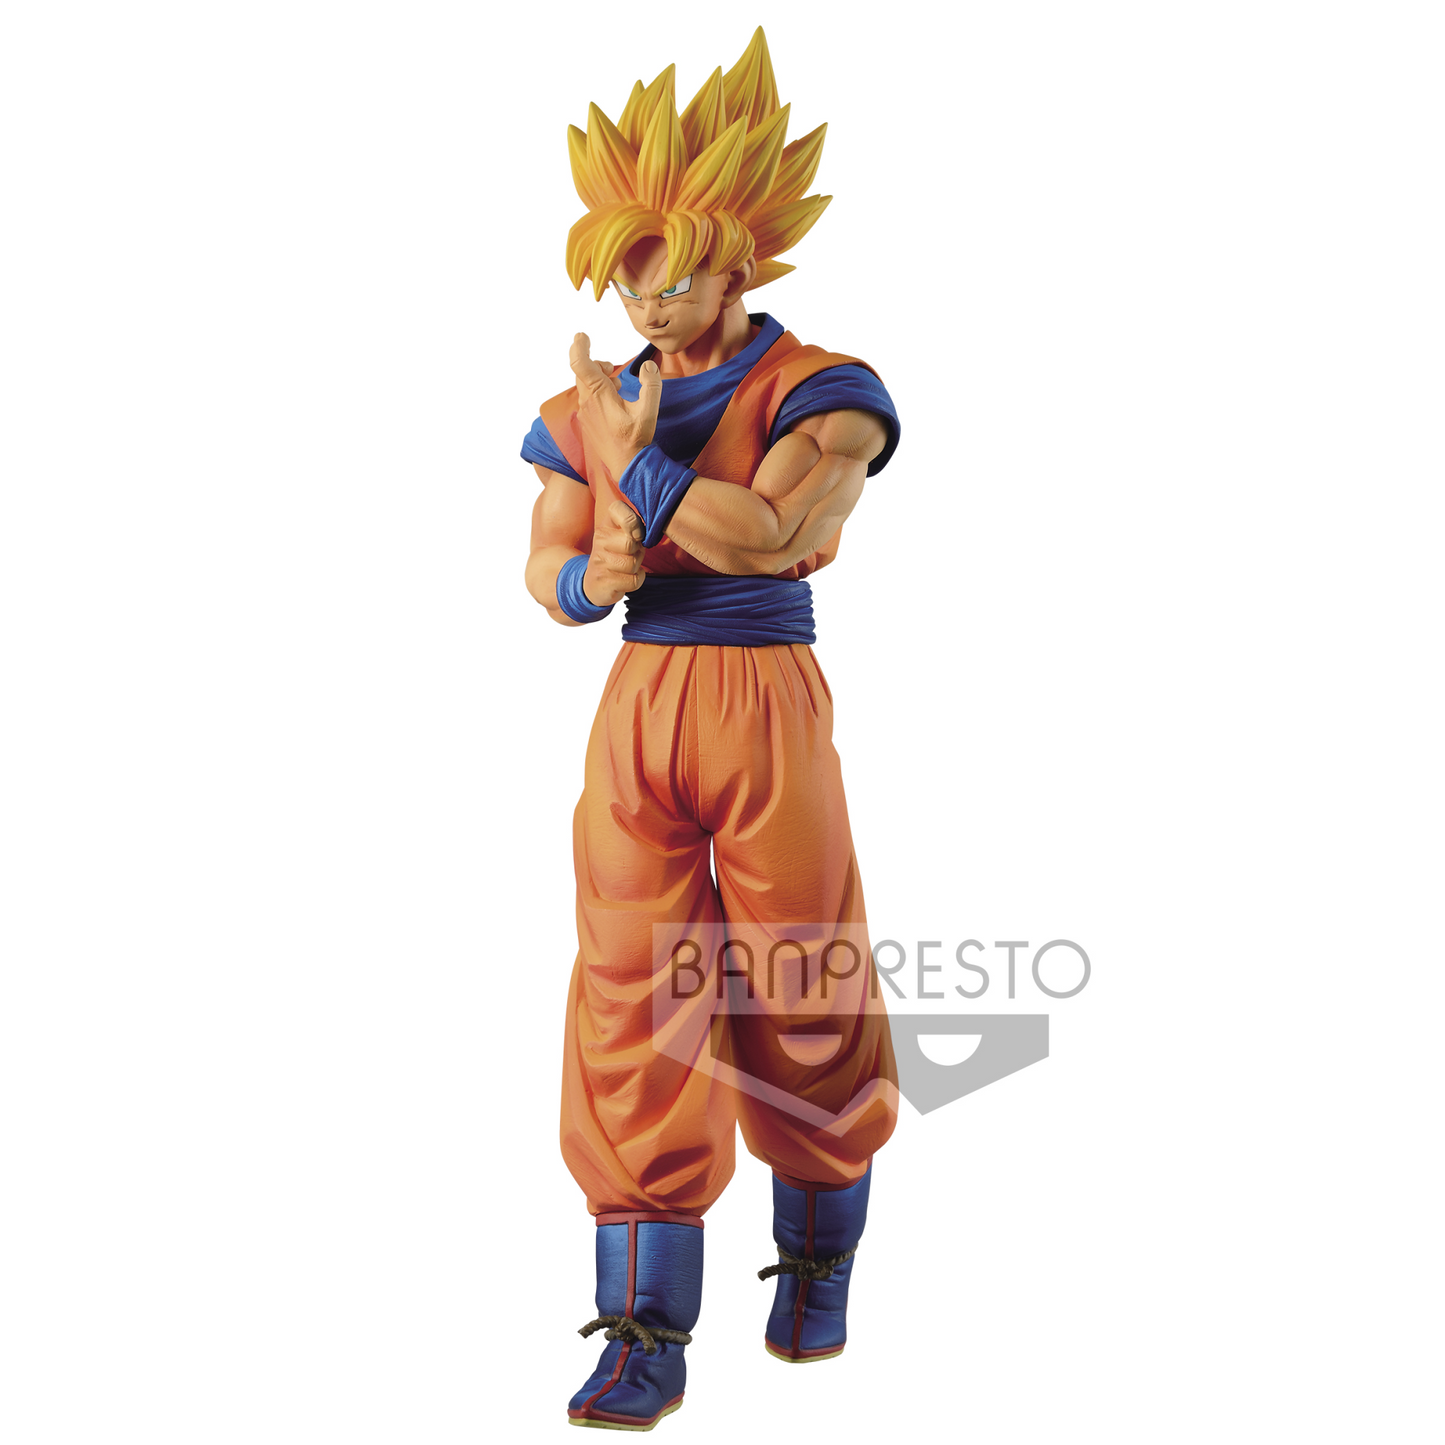 Dragon Ball Z: Banpresto - Solid Works V1 Super Saiyan Son Goku 23cm